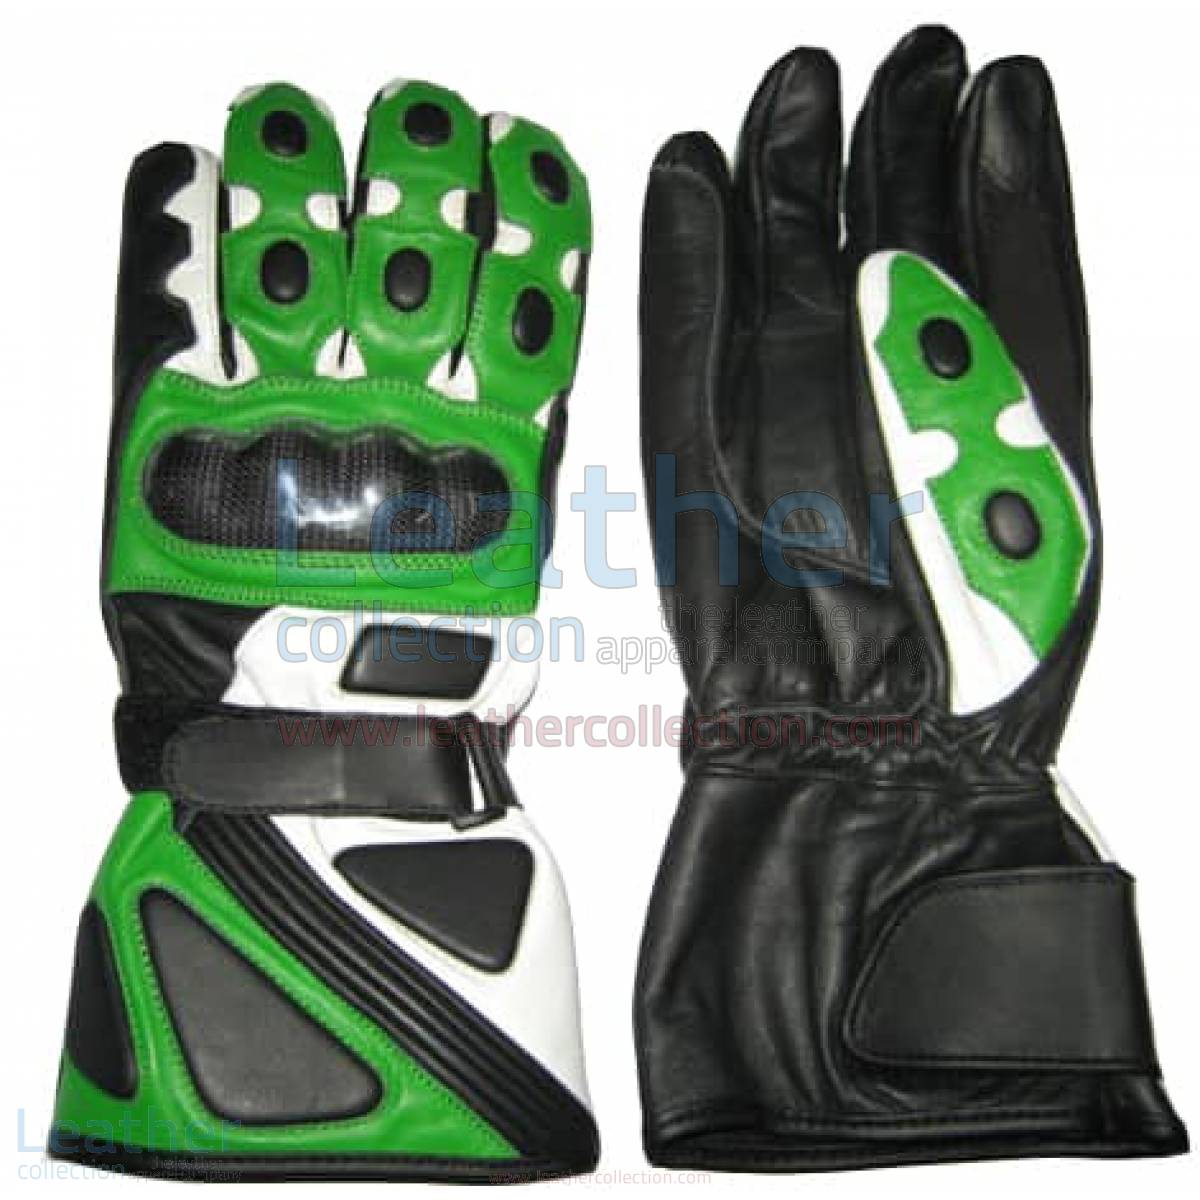 Bravo Green Motorcycle Race Gloves